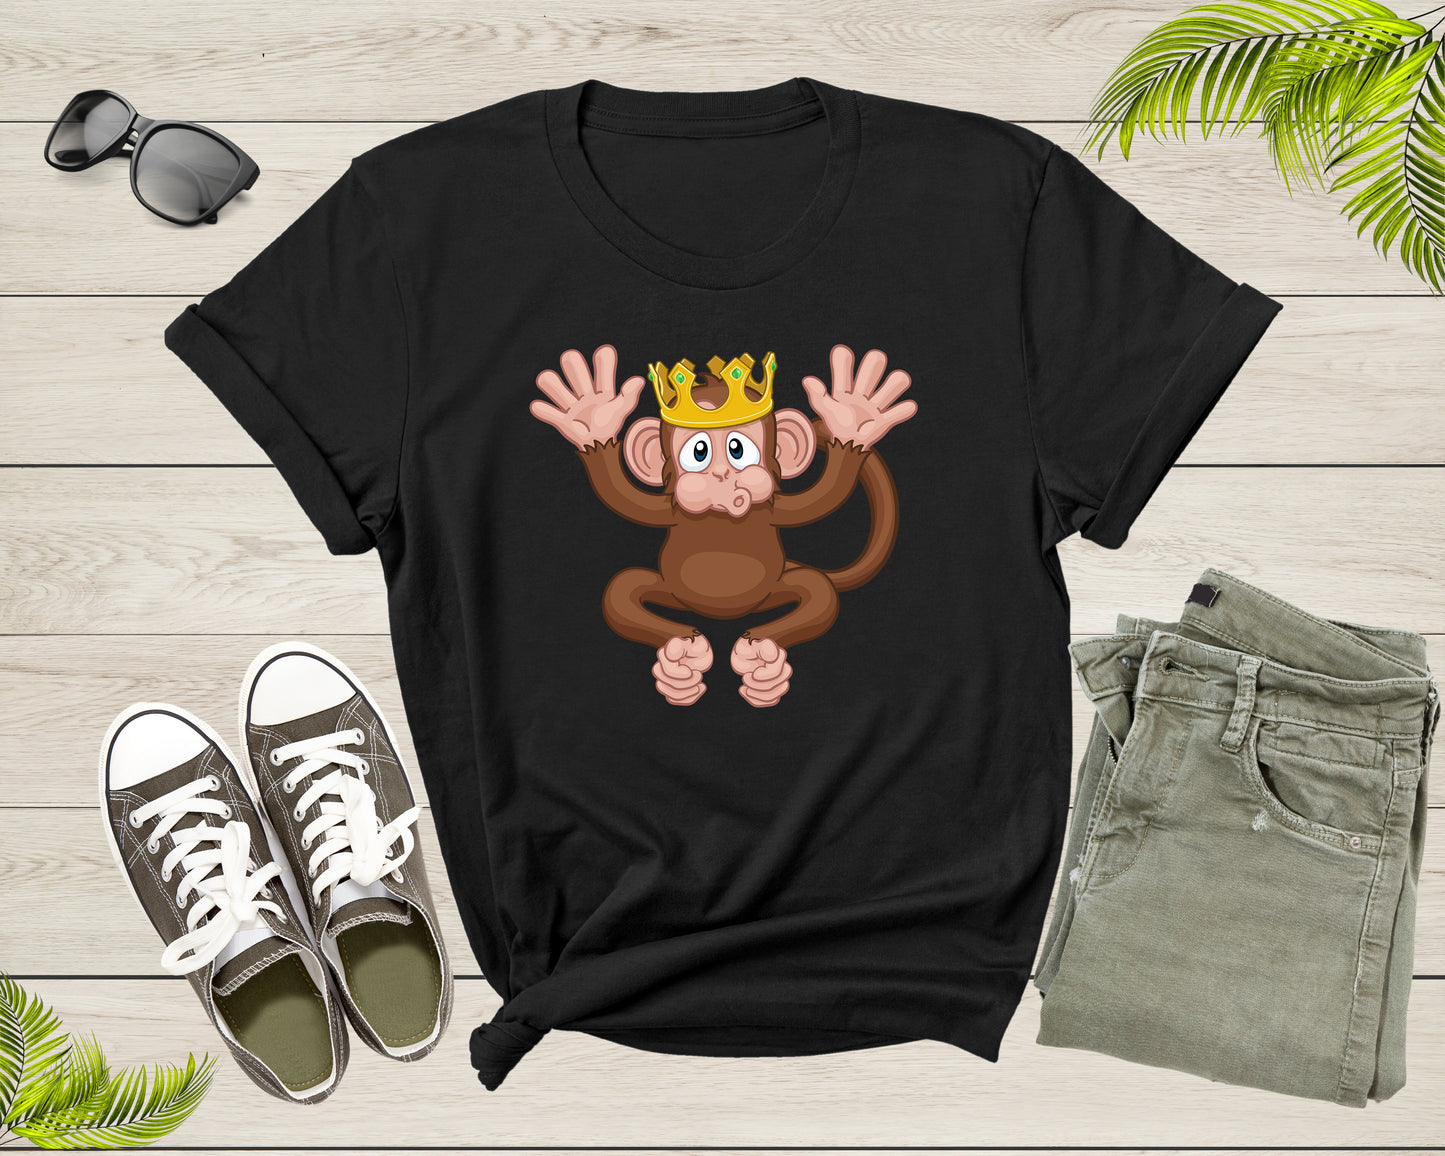 Fun Monkey Wearing King Crown Cute Animal Cartoon Character T-Shirt Monkey Lover Gift T Shirt for Men Women Kids Boys Girls Graphic Tshirt